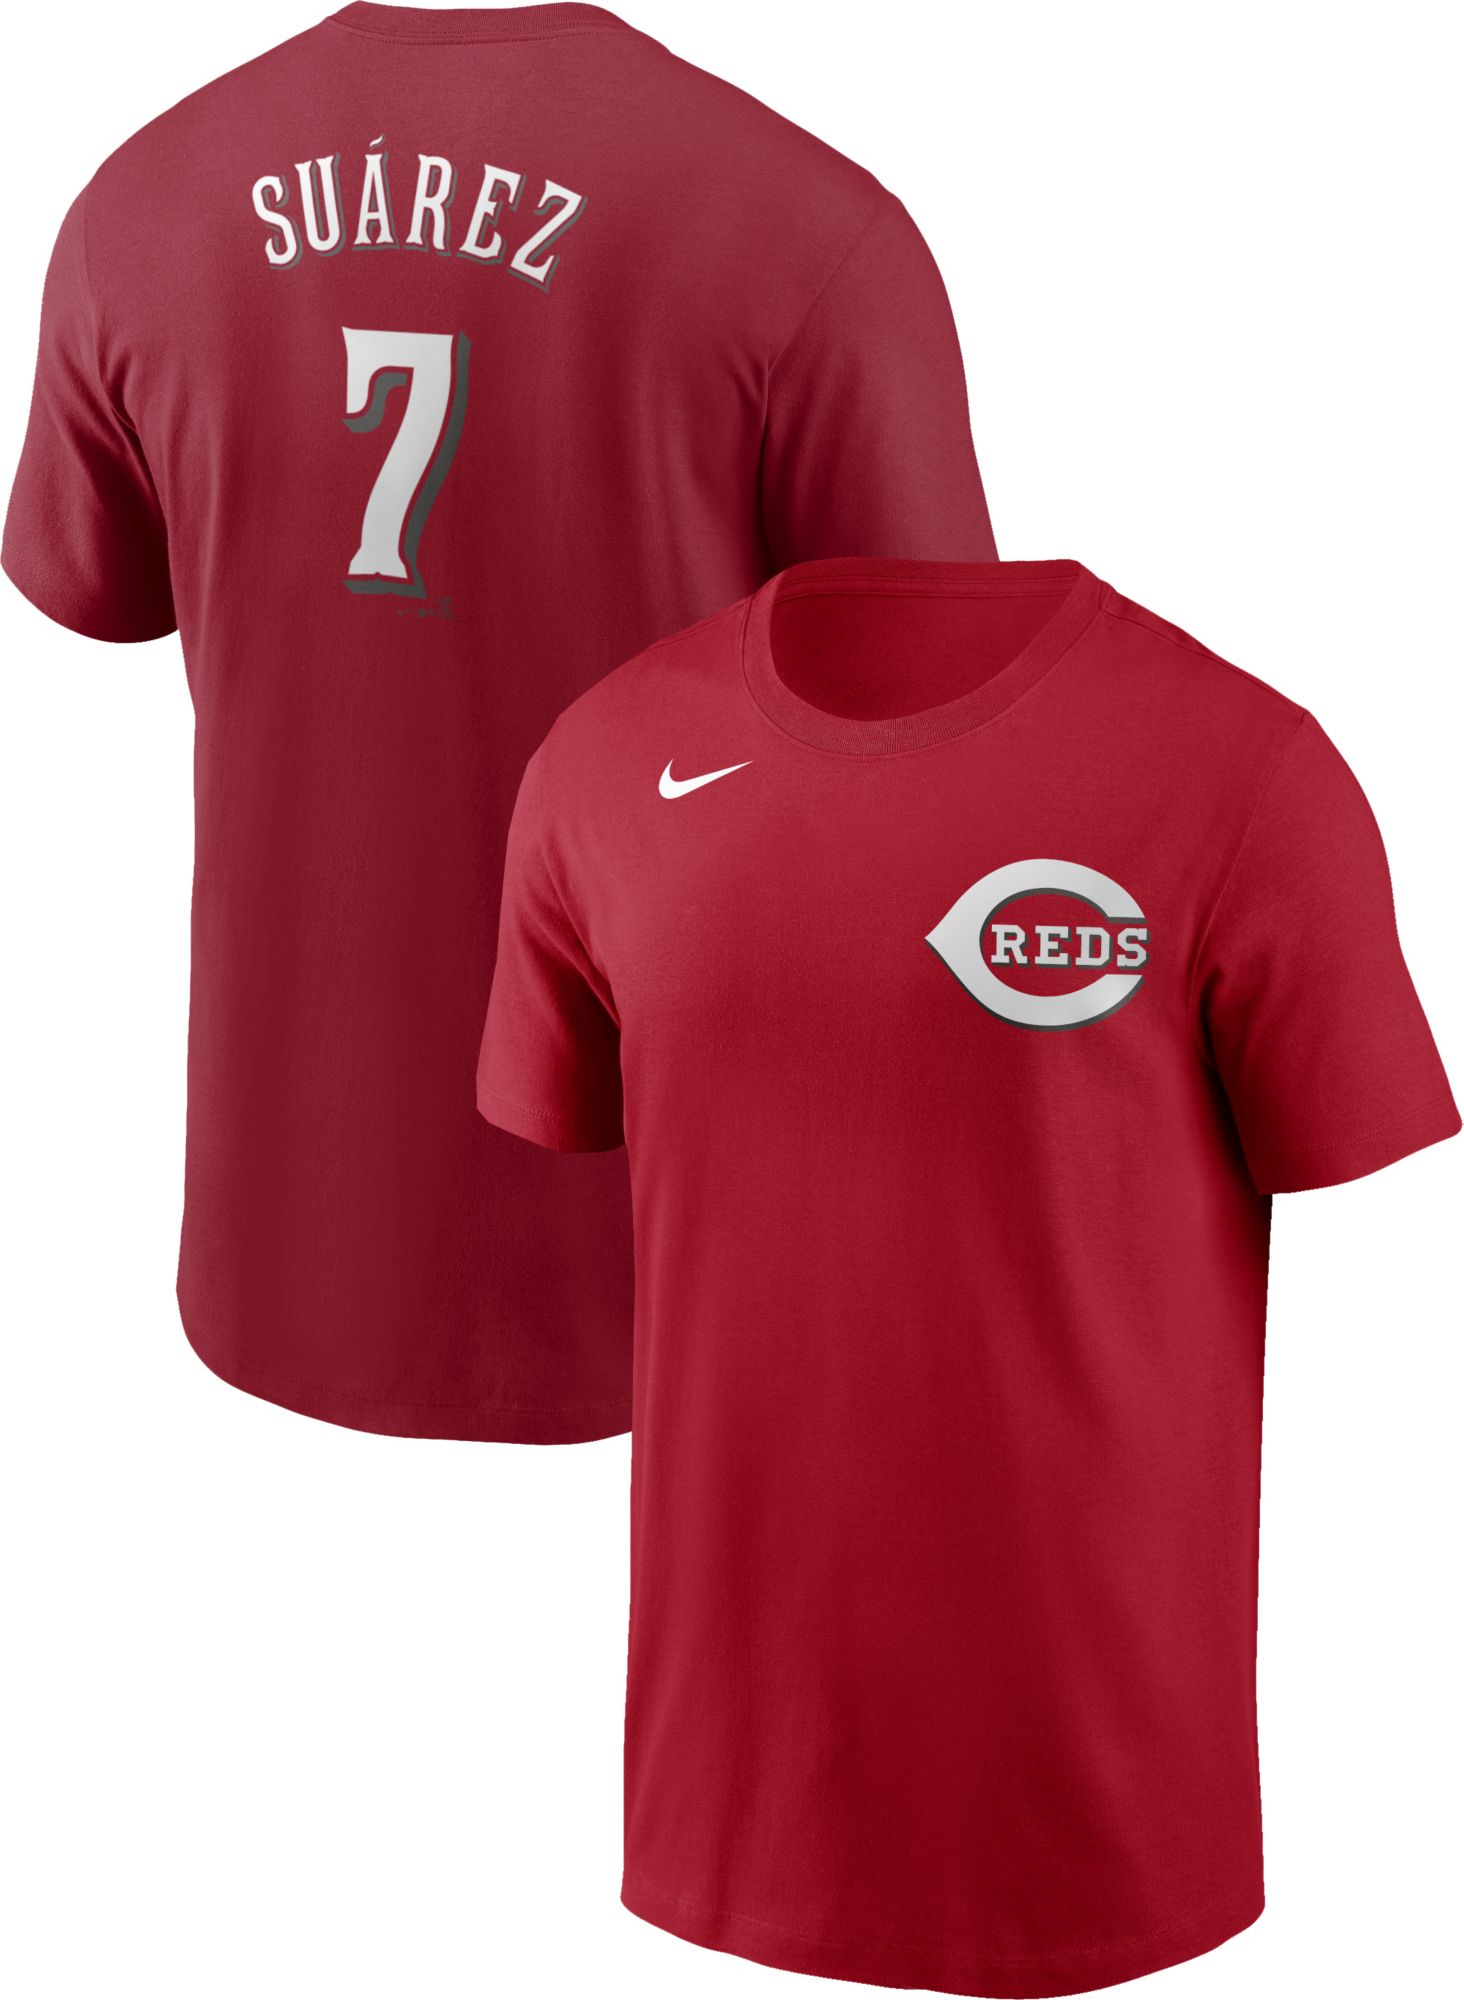 Nike / Men's Cincinnati Reds Eugenio Suarez #7 Red T-Shirt